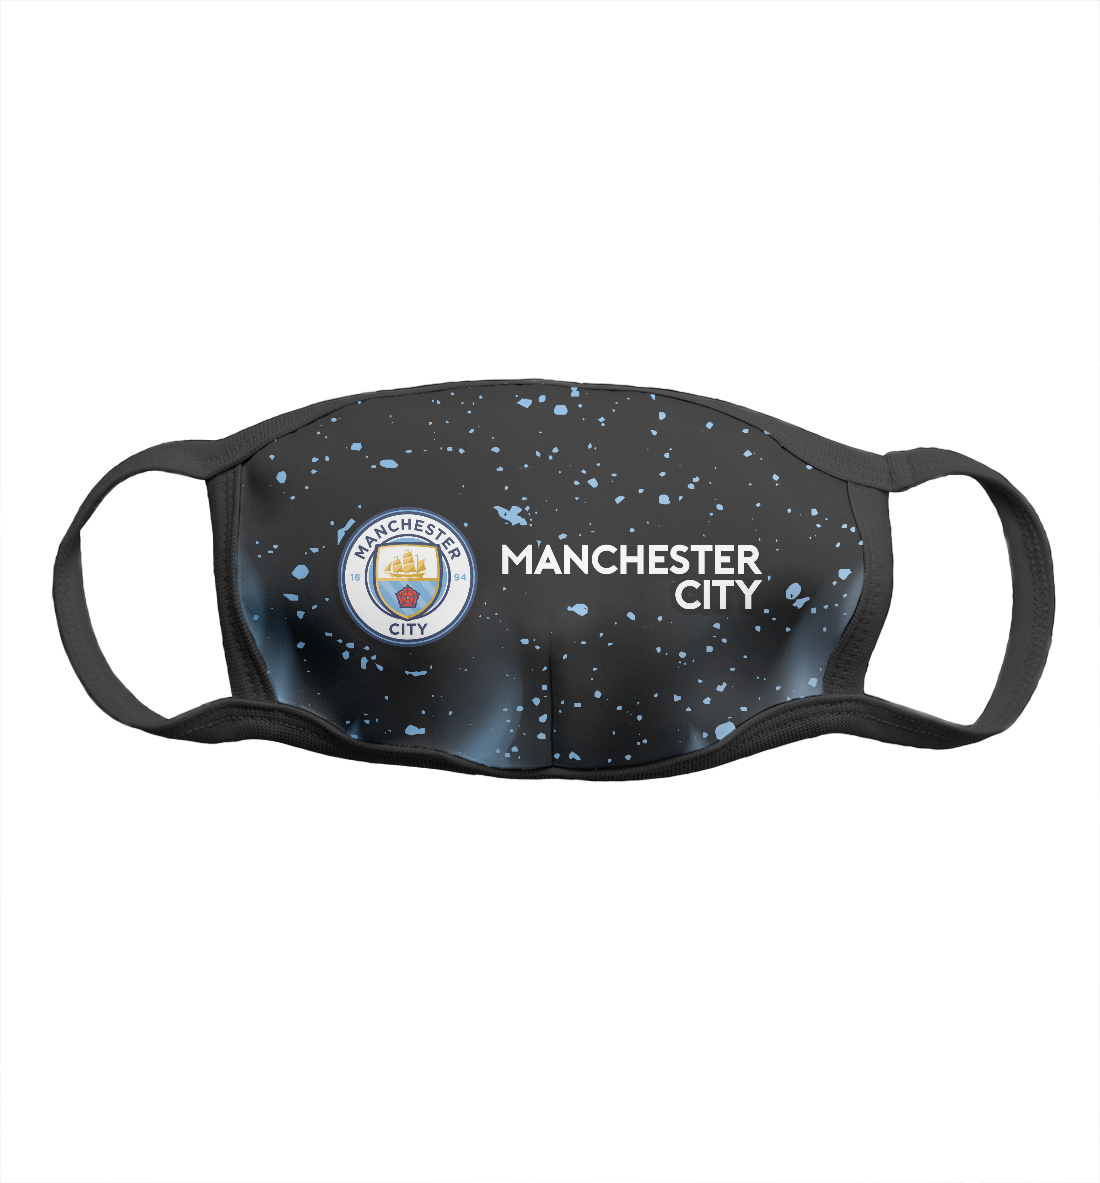 Мужская Маска Manchester City / Манчестер Сити, артикул MNC-517850-msk-2mp